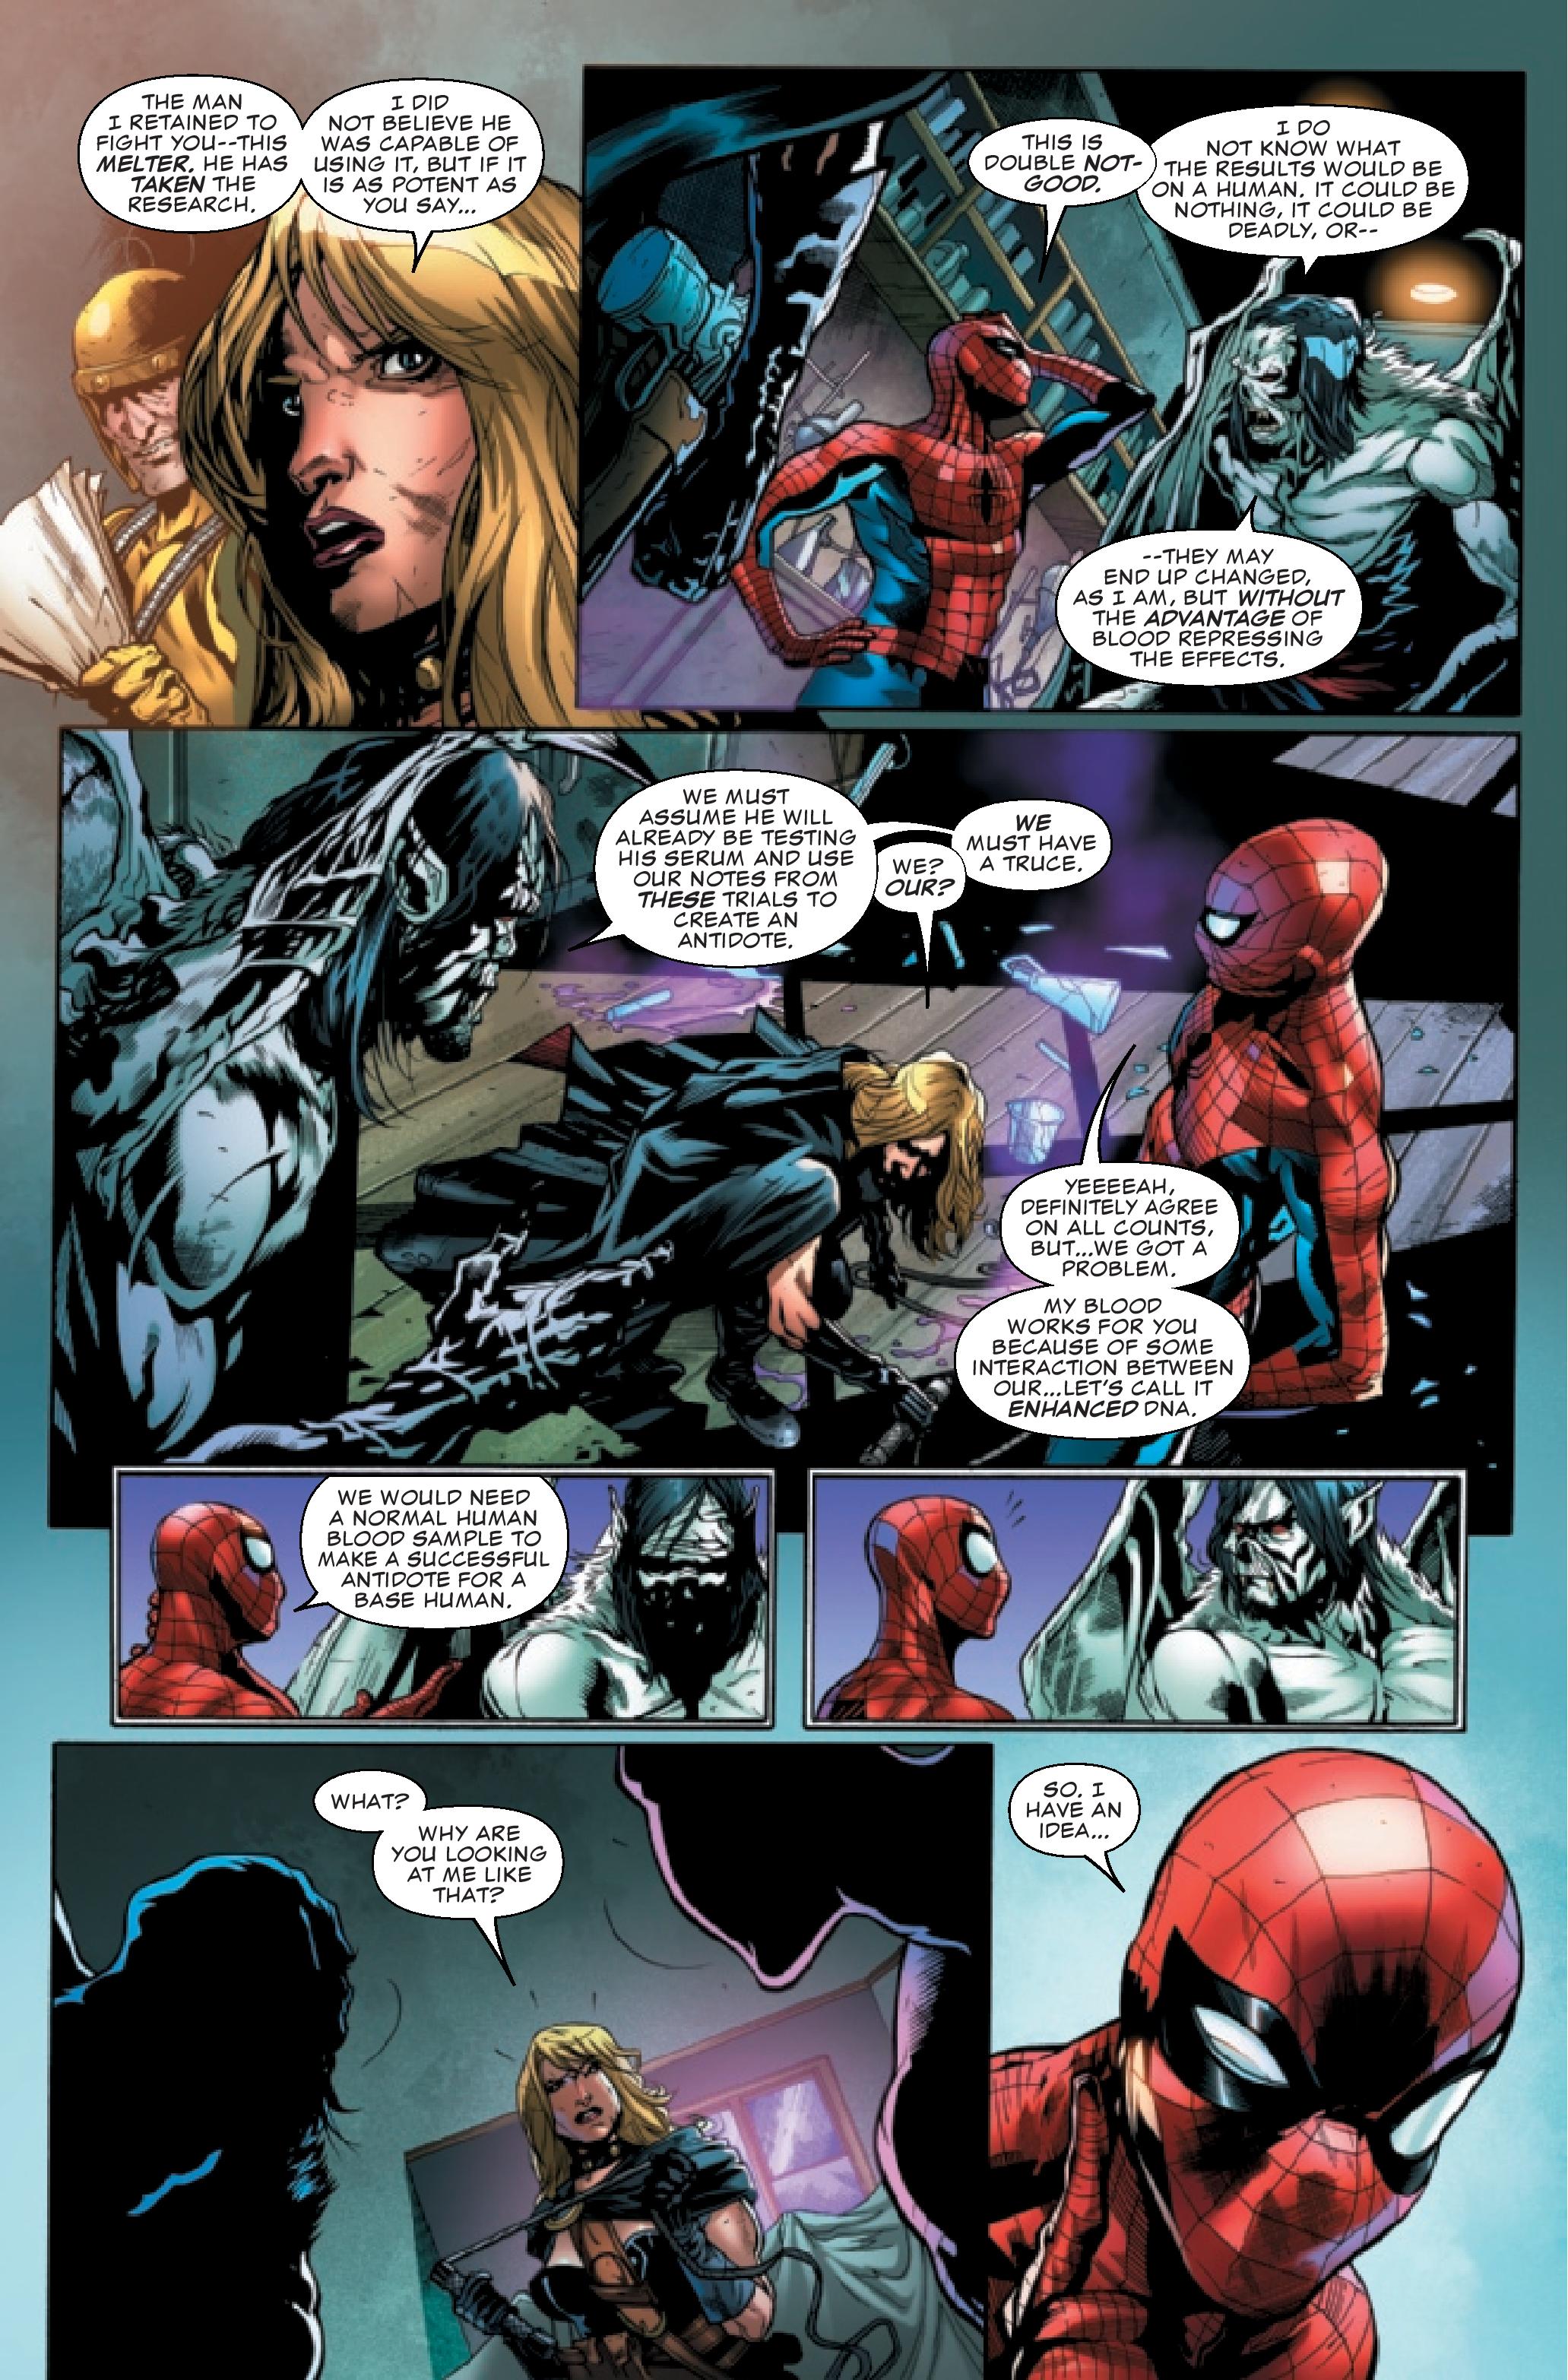 Morbius #5 Pyeong Jun Park Spider-Woman Variant